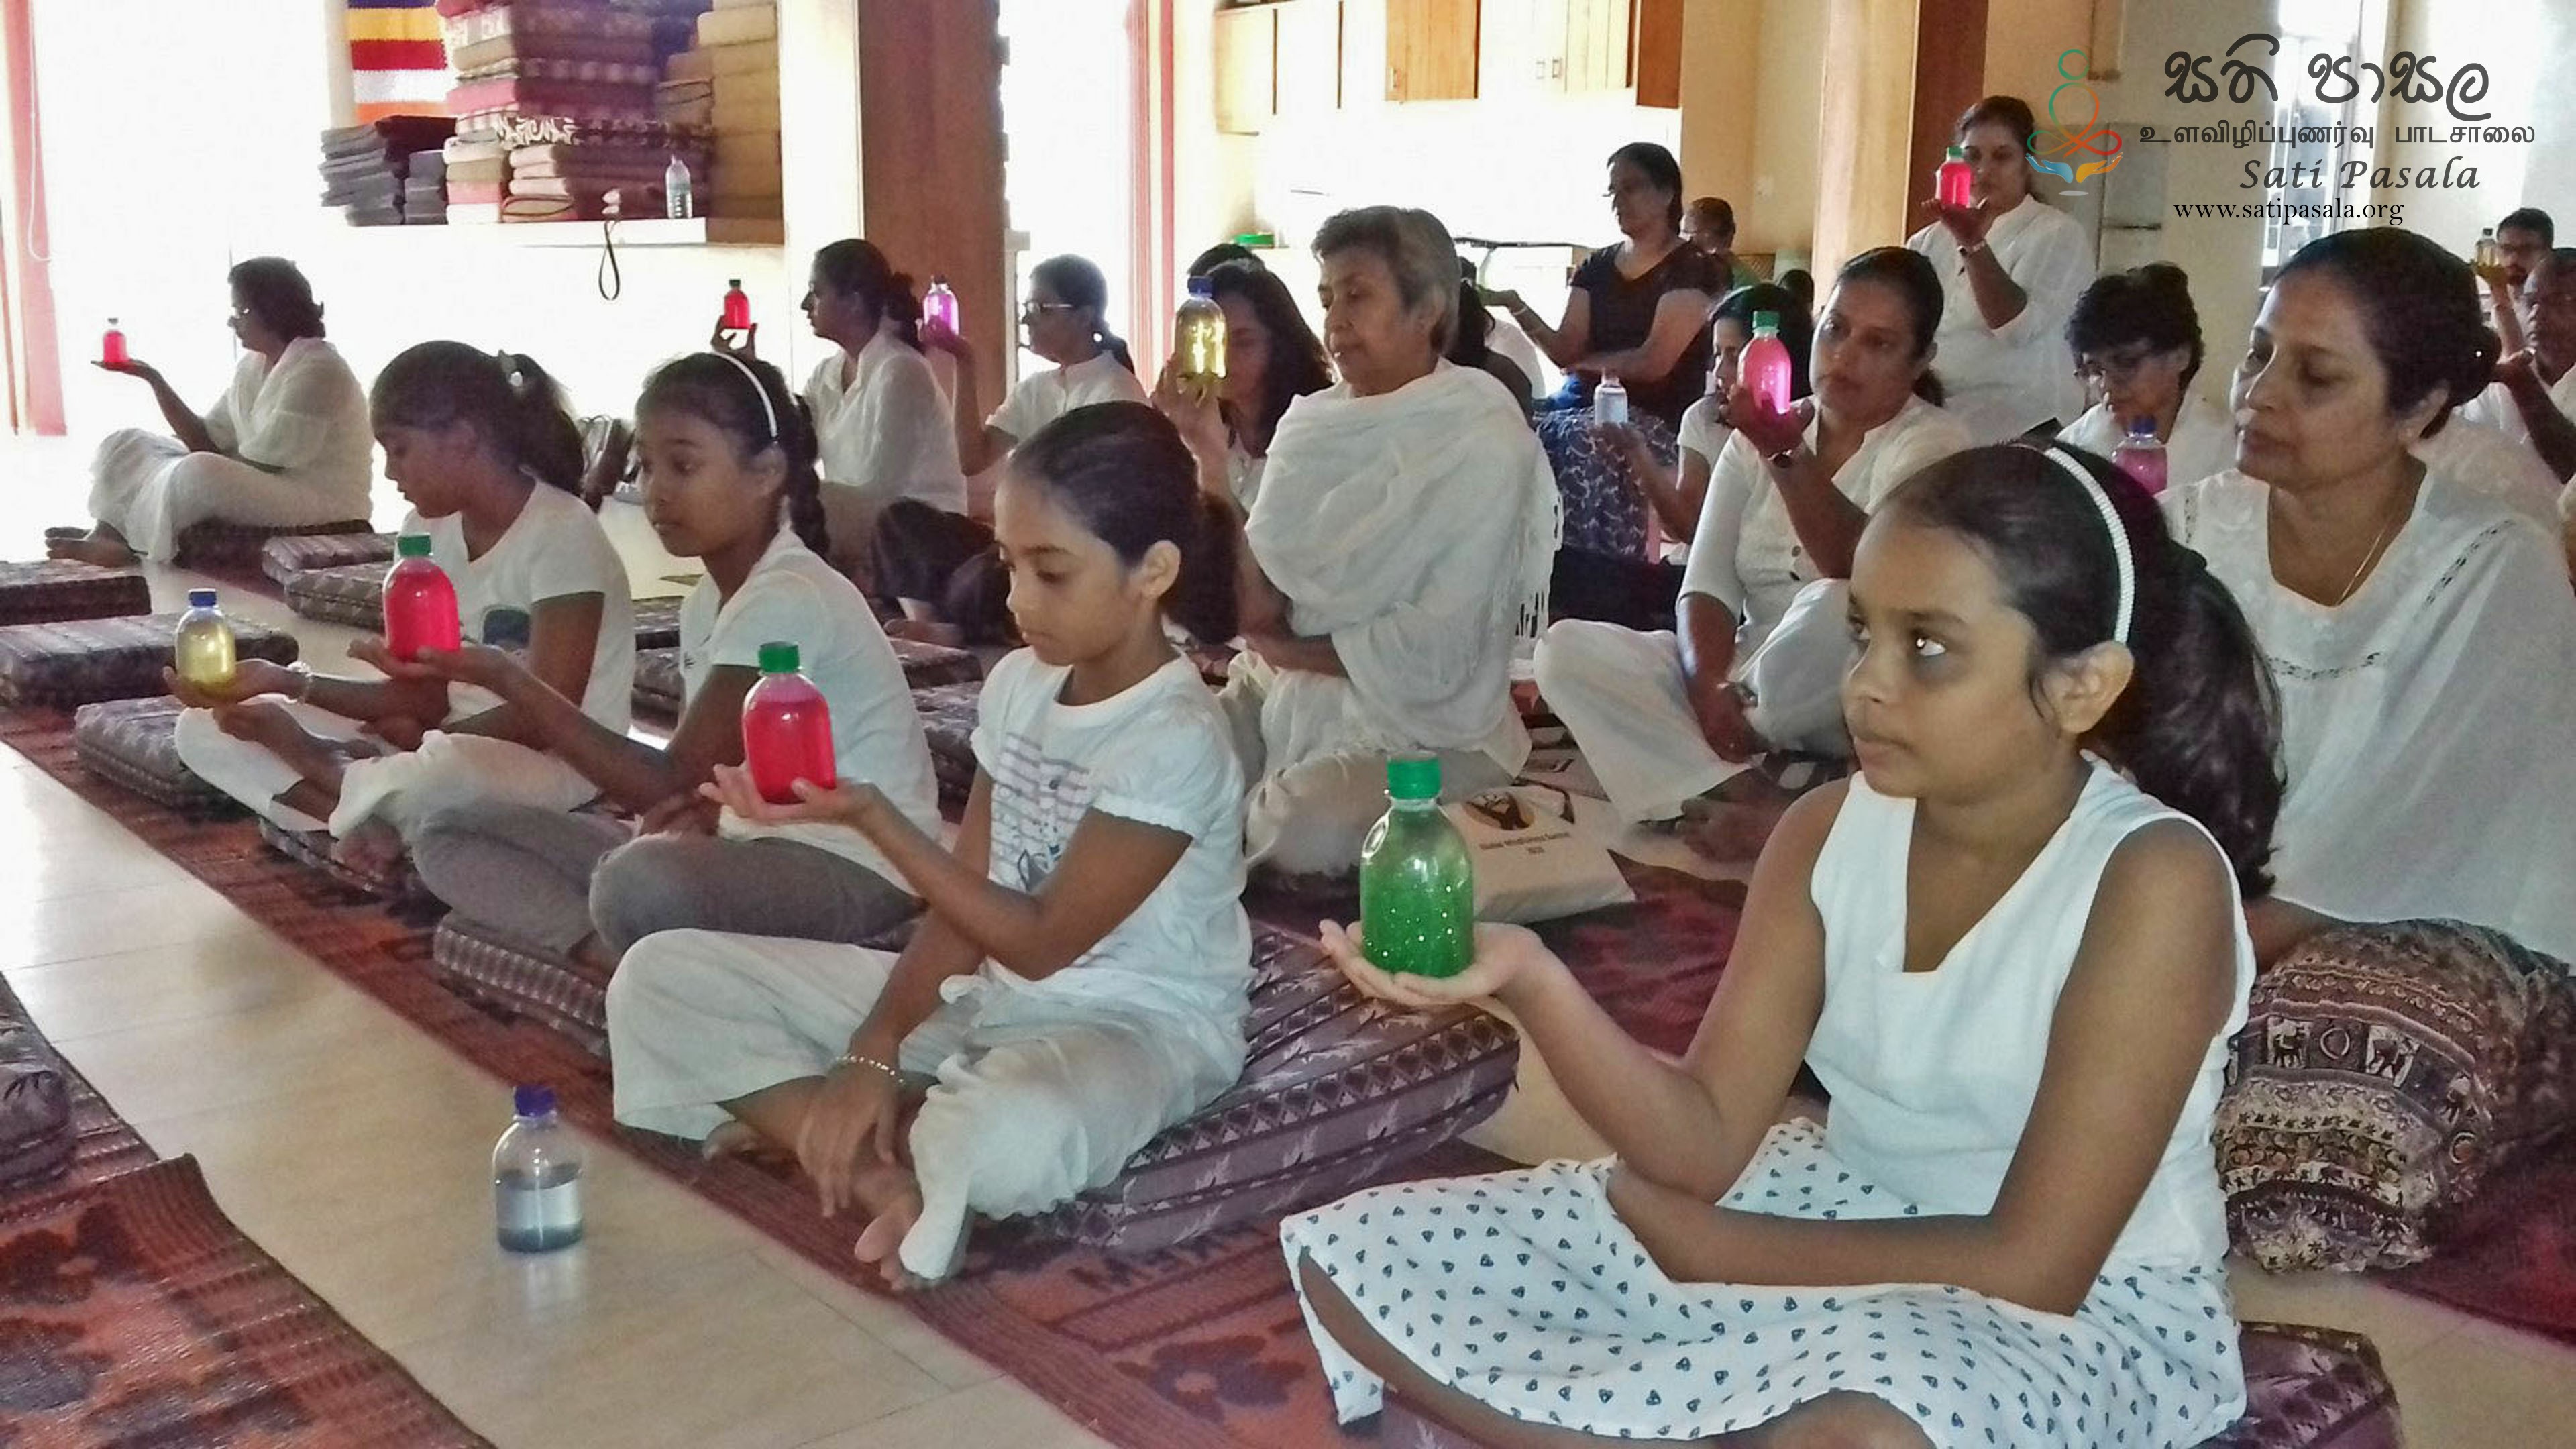 Monthly Sati Pasala Programme at Seelawathi Sevana, Baththaramulla - 20th July 2019